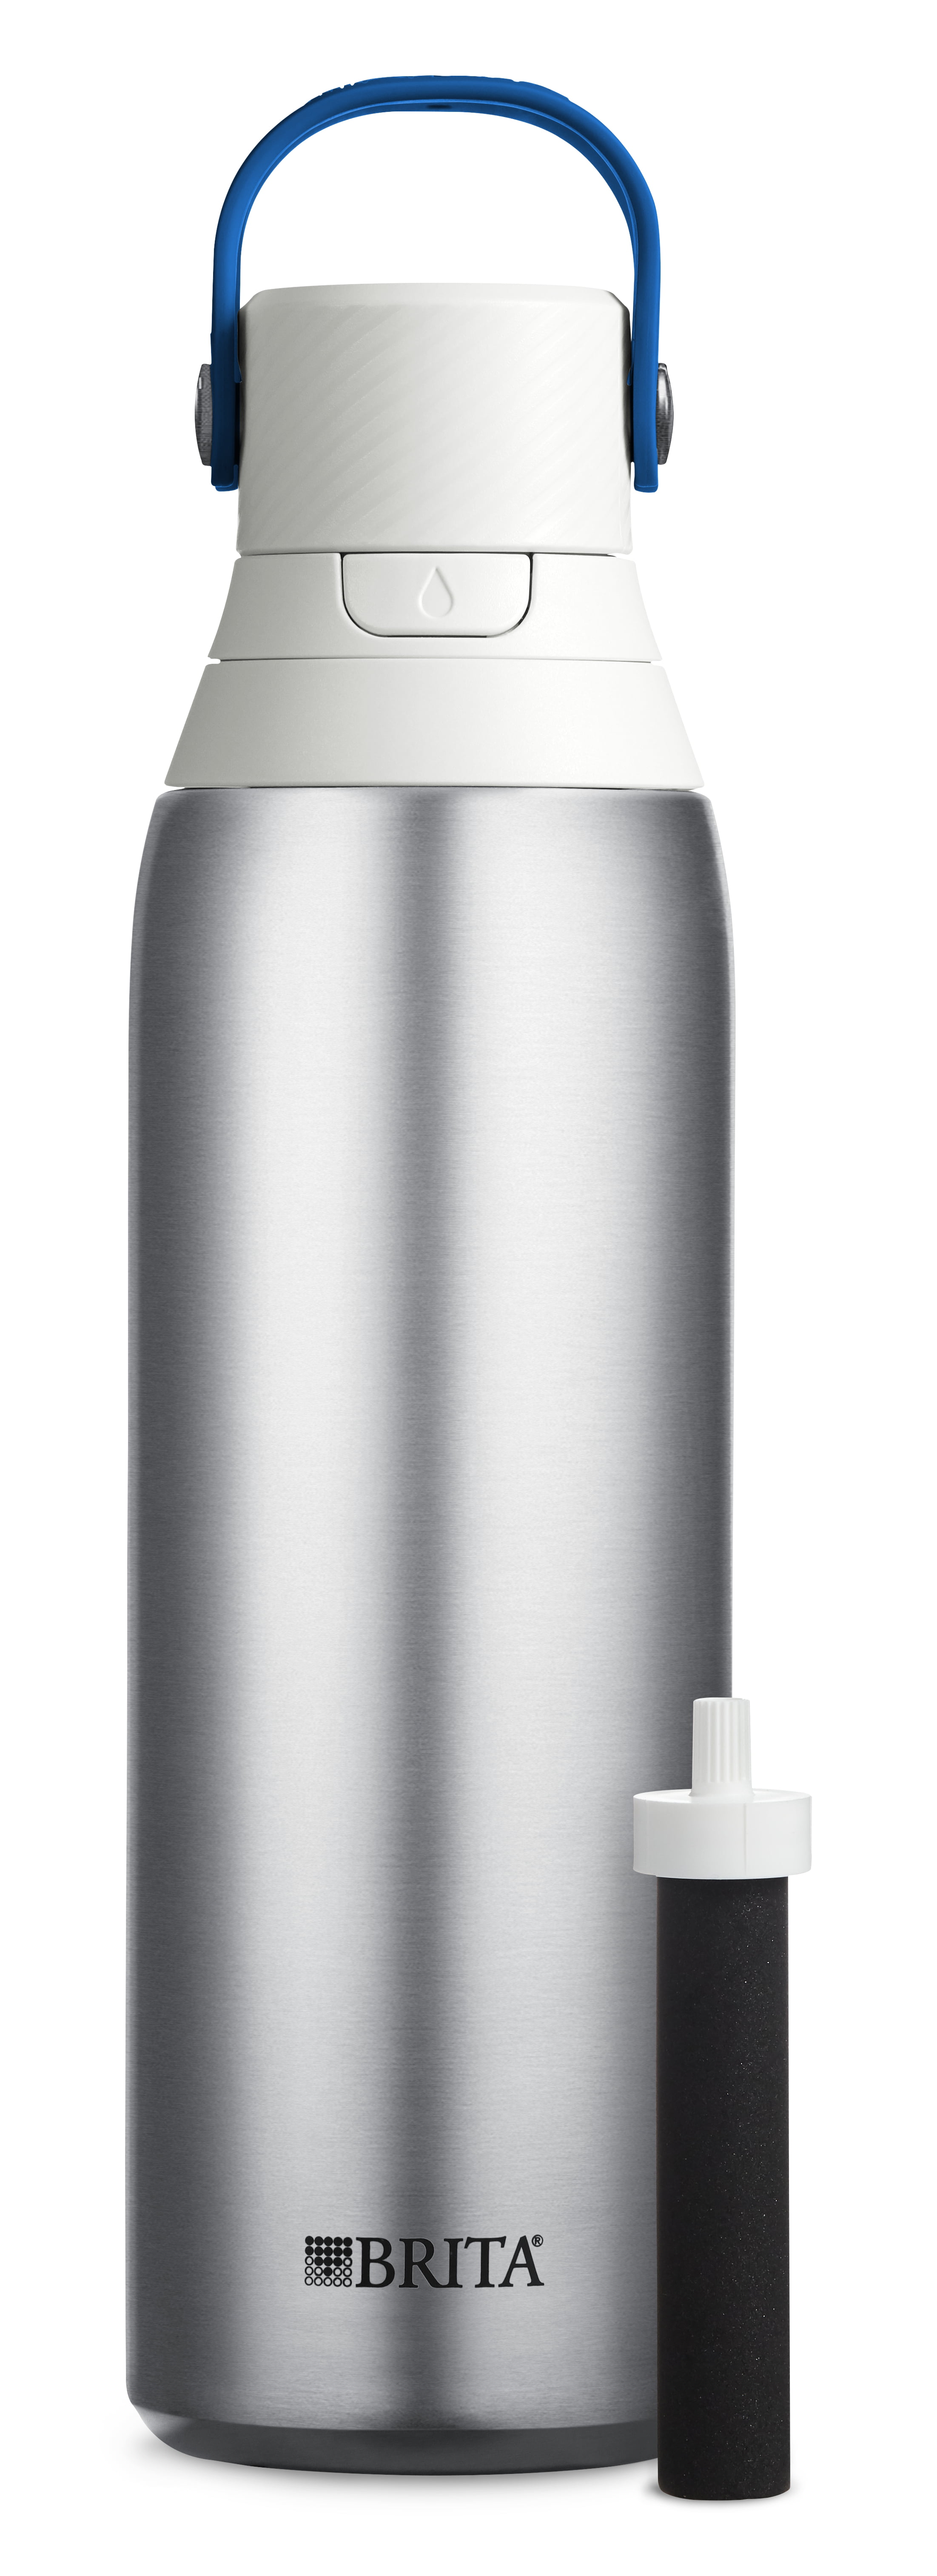 Water purification bottle